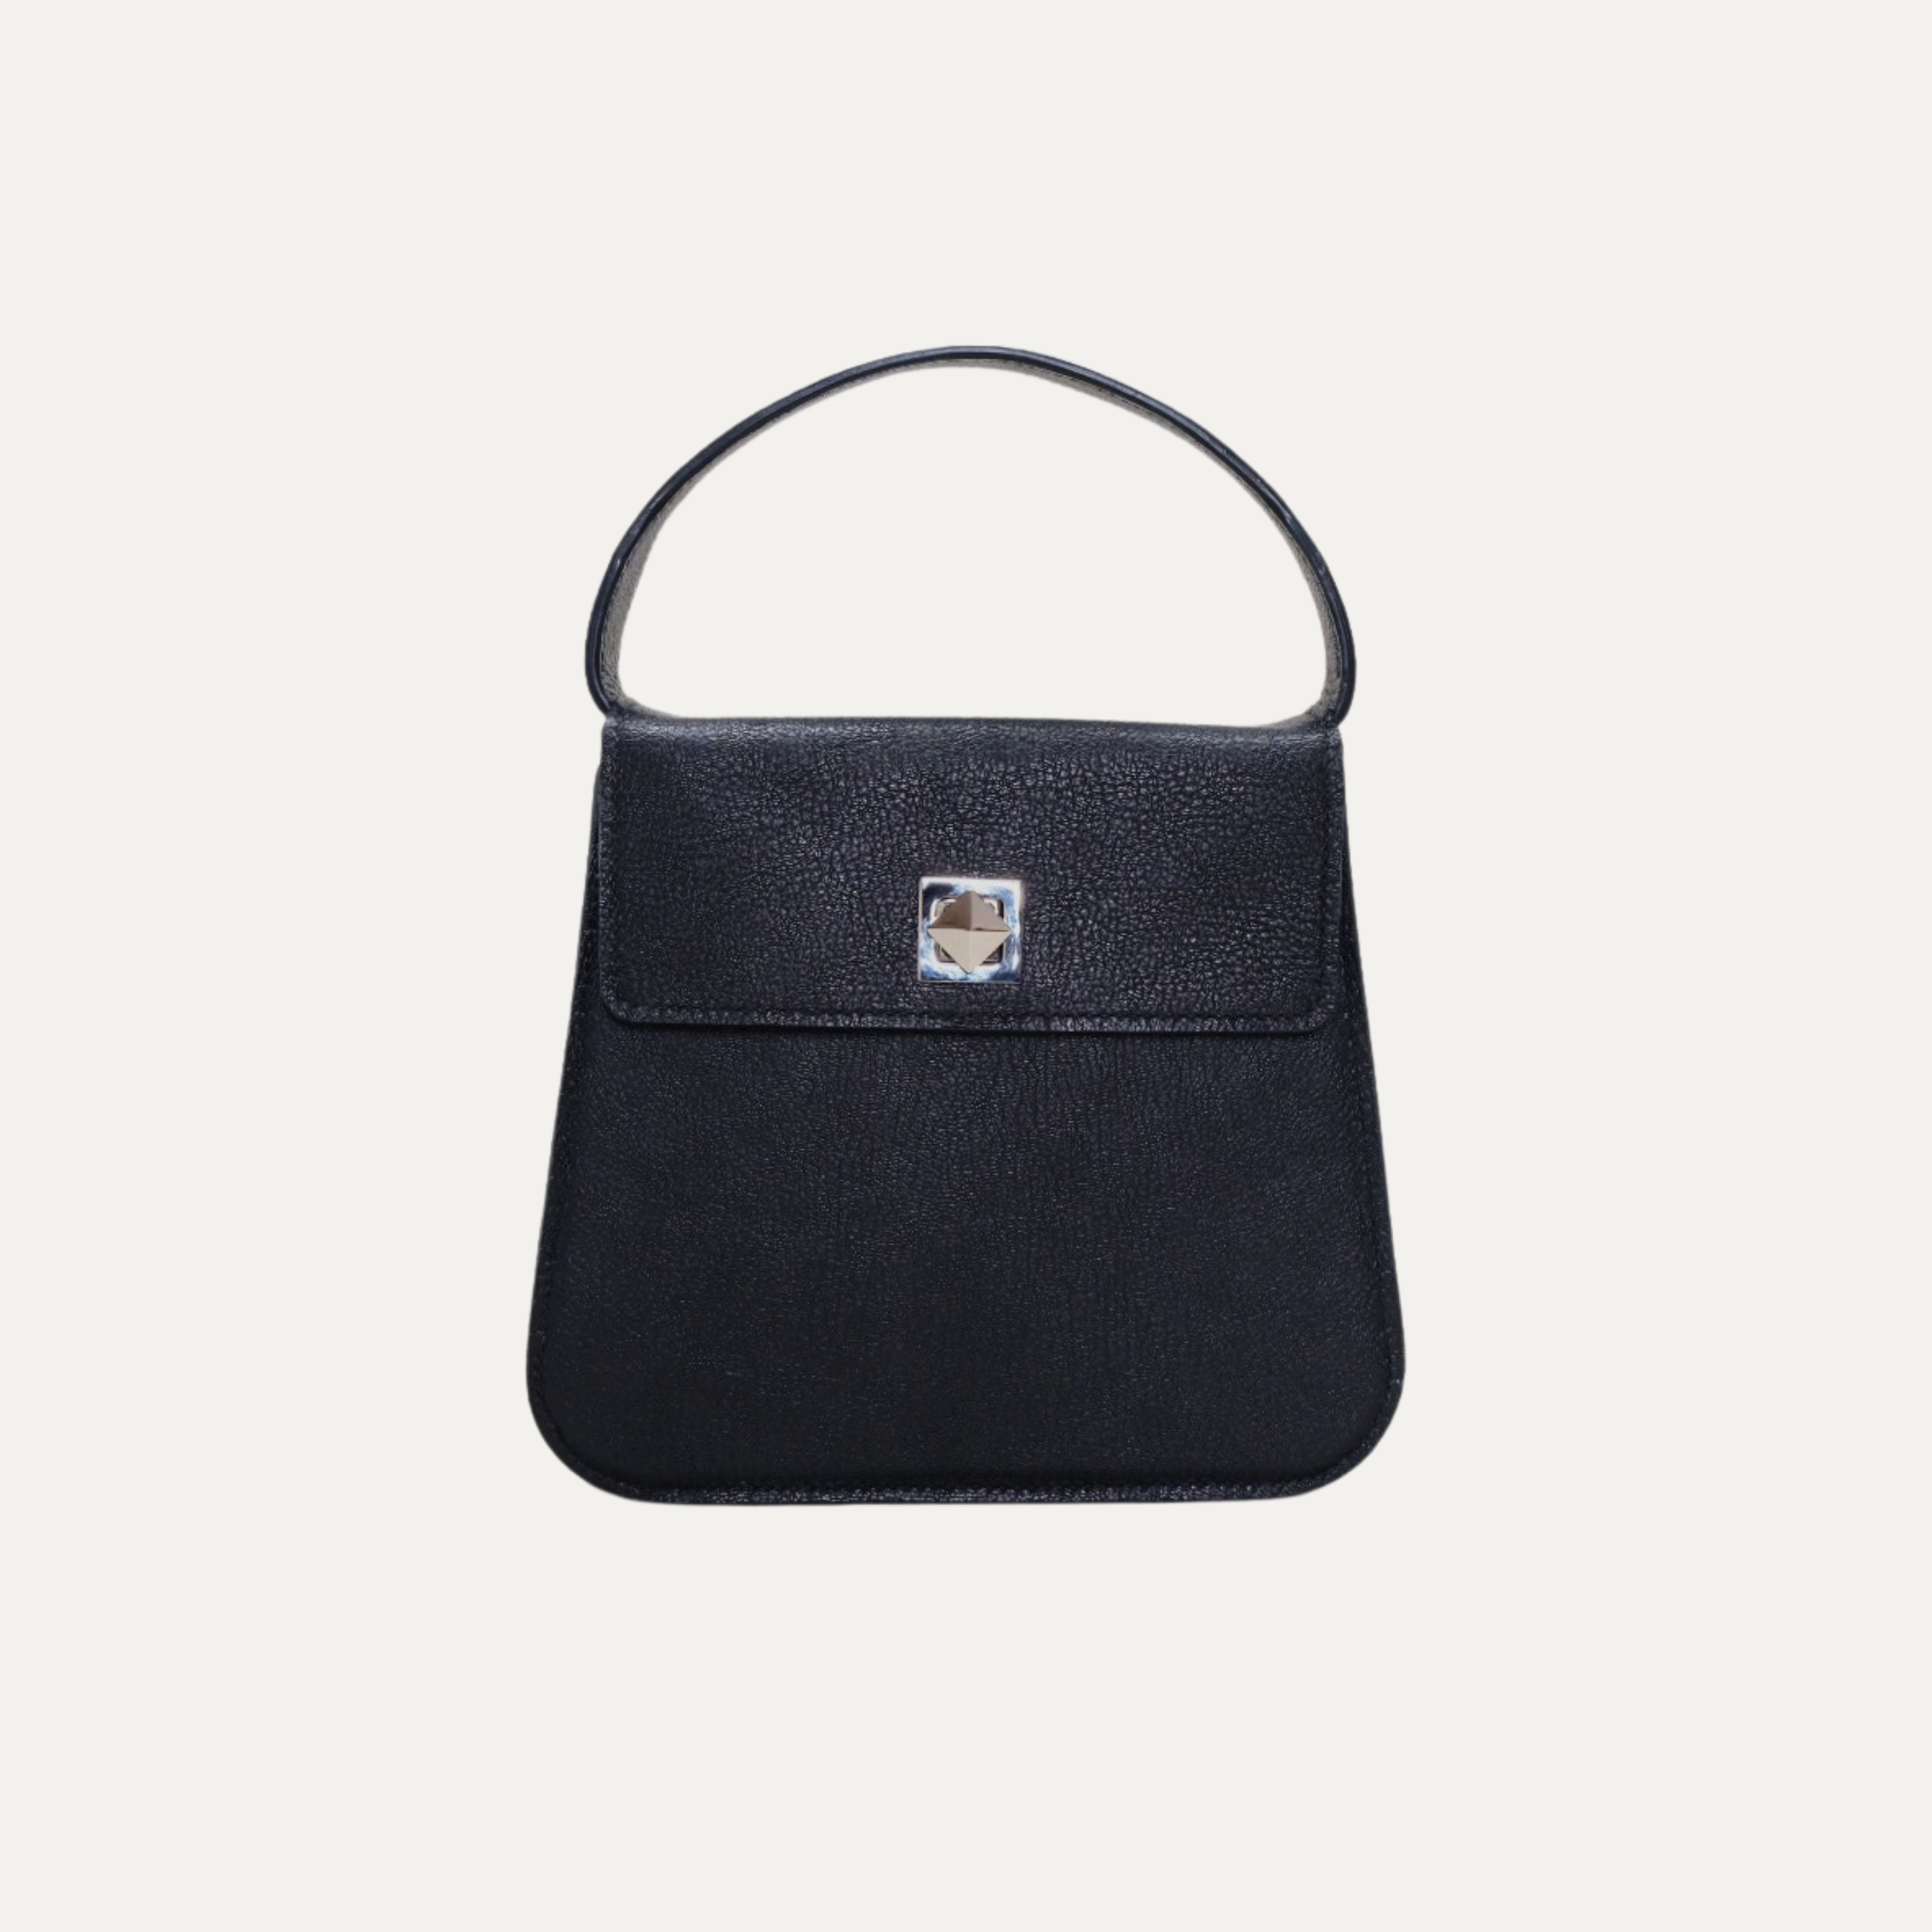 Black leather top-handle luxury handbag made in Australia